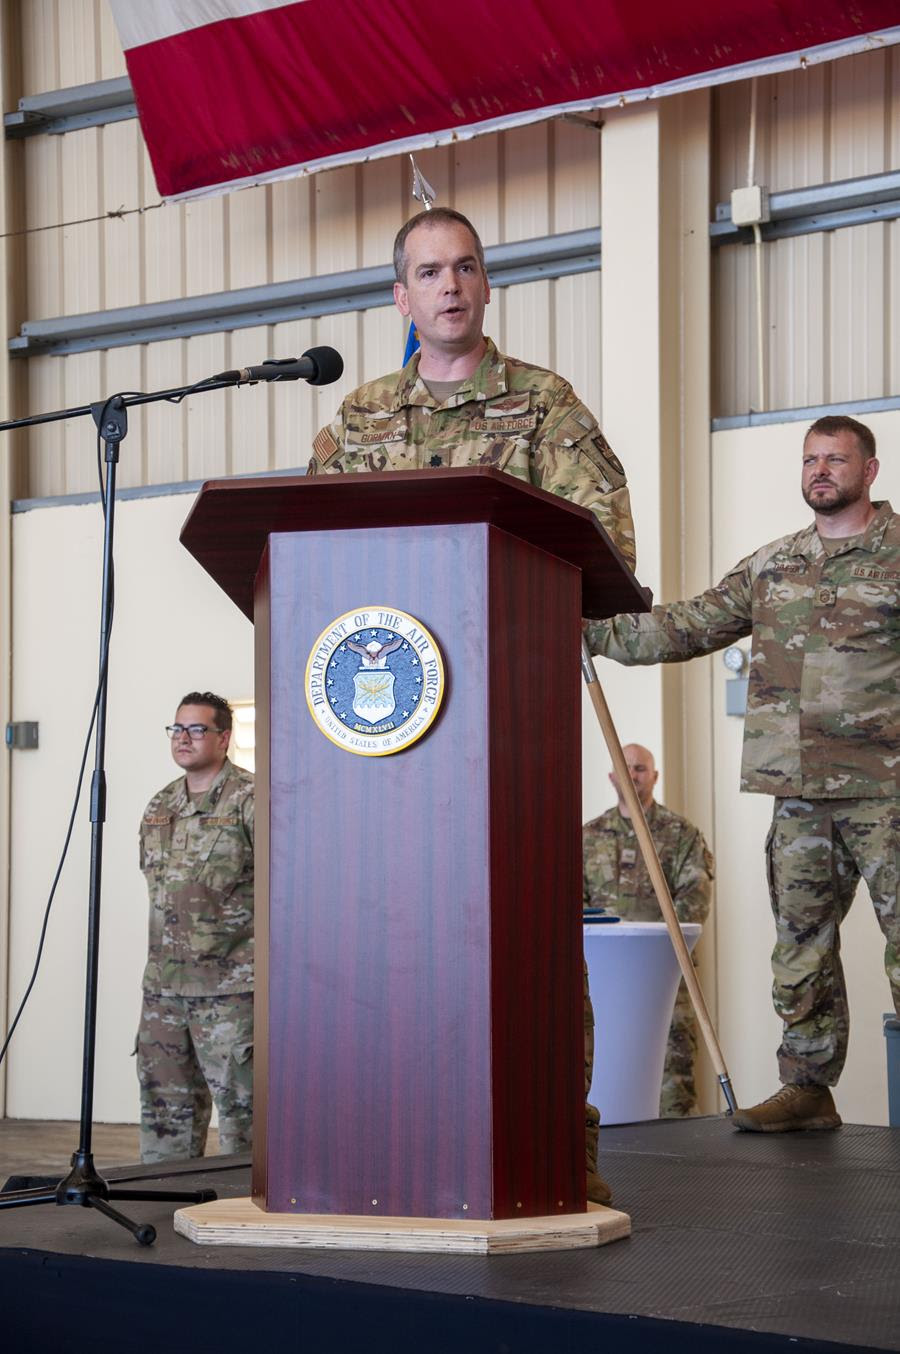 Lt Col David C. Gorman standing behind podium